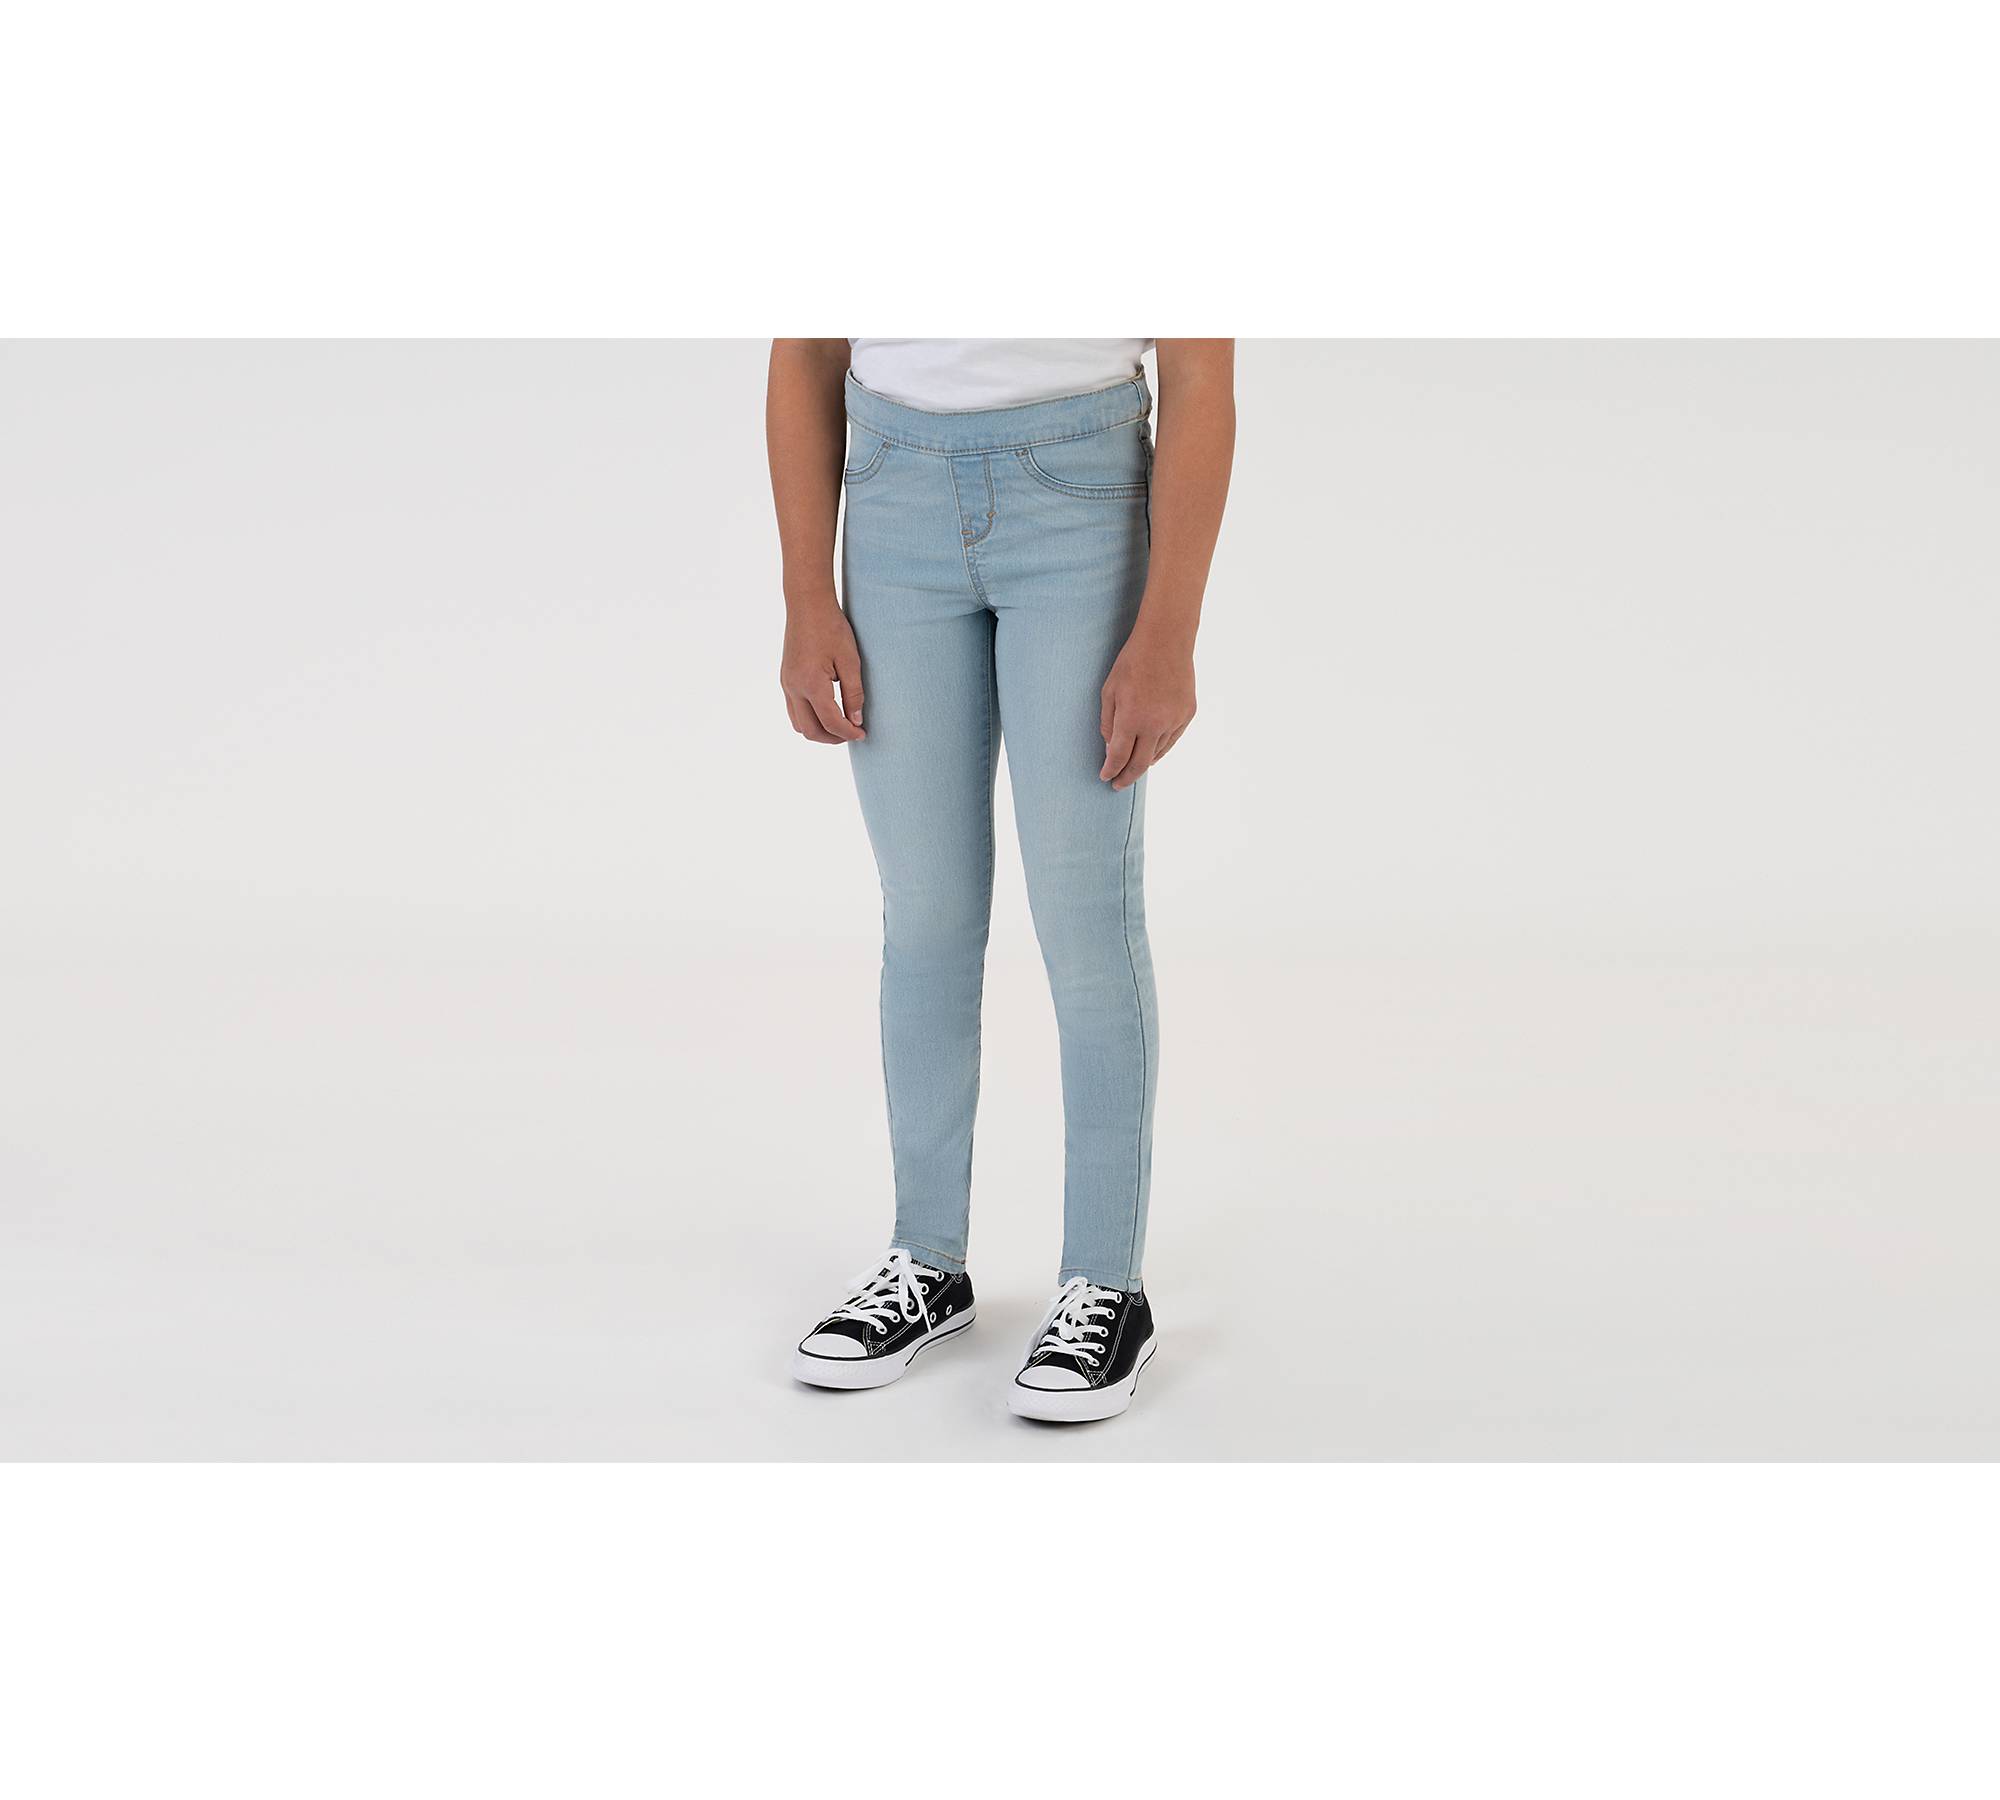 Kids Girls Stretchy Denim Jeans Jeggings Pants Leggings Trousers 5